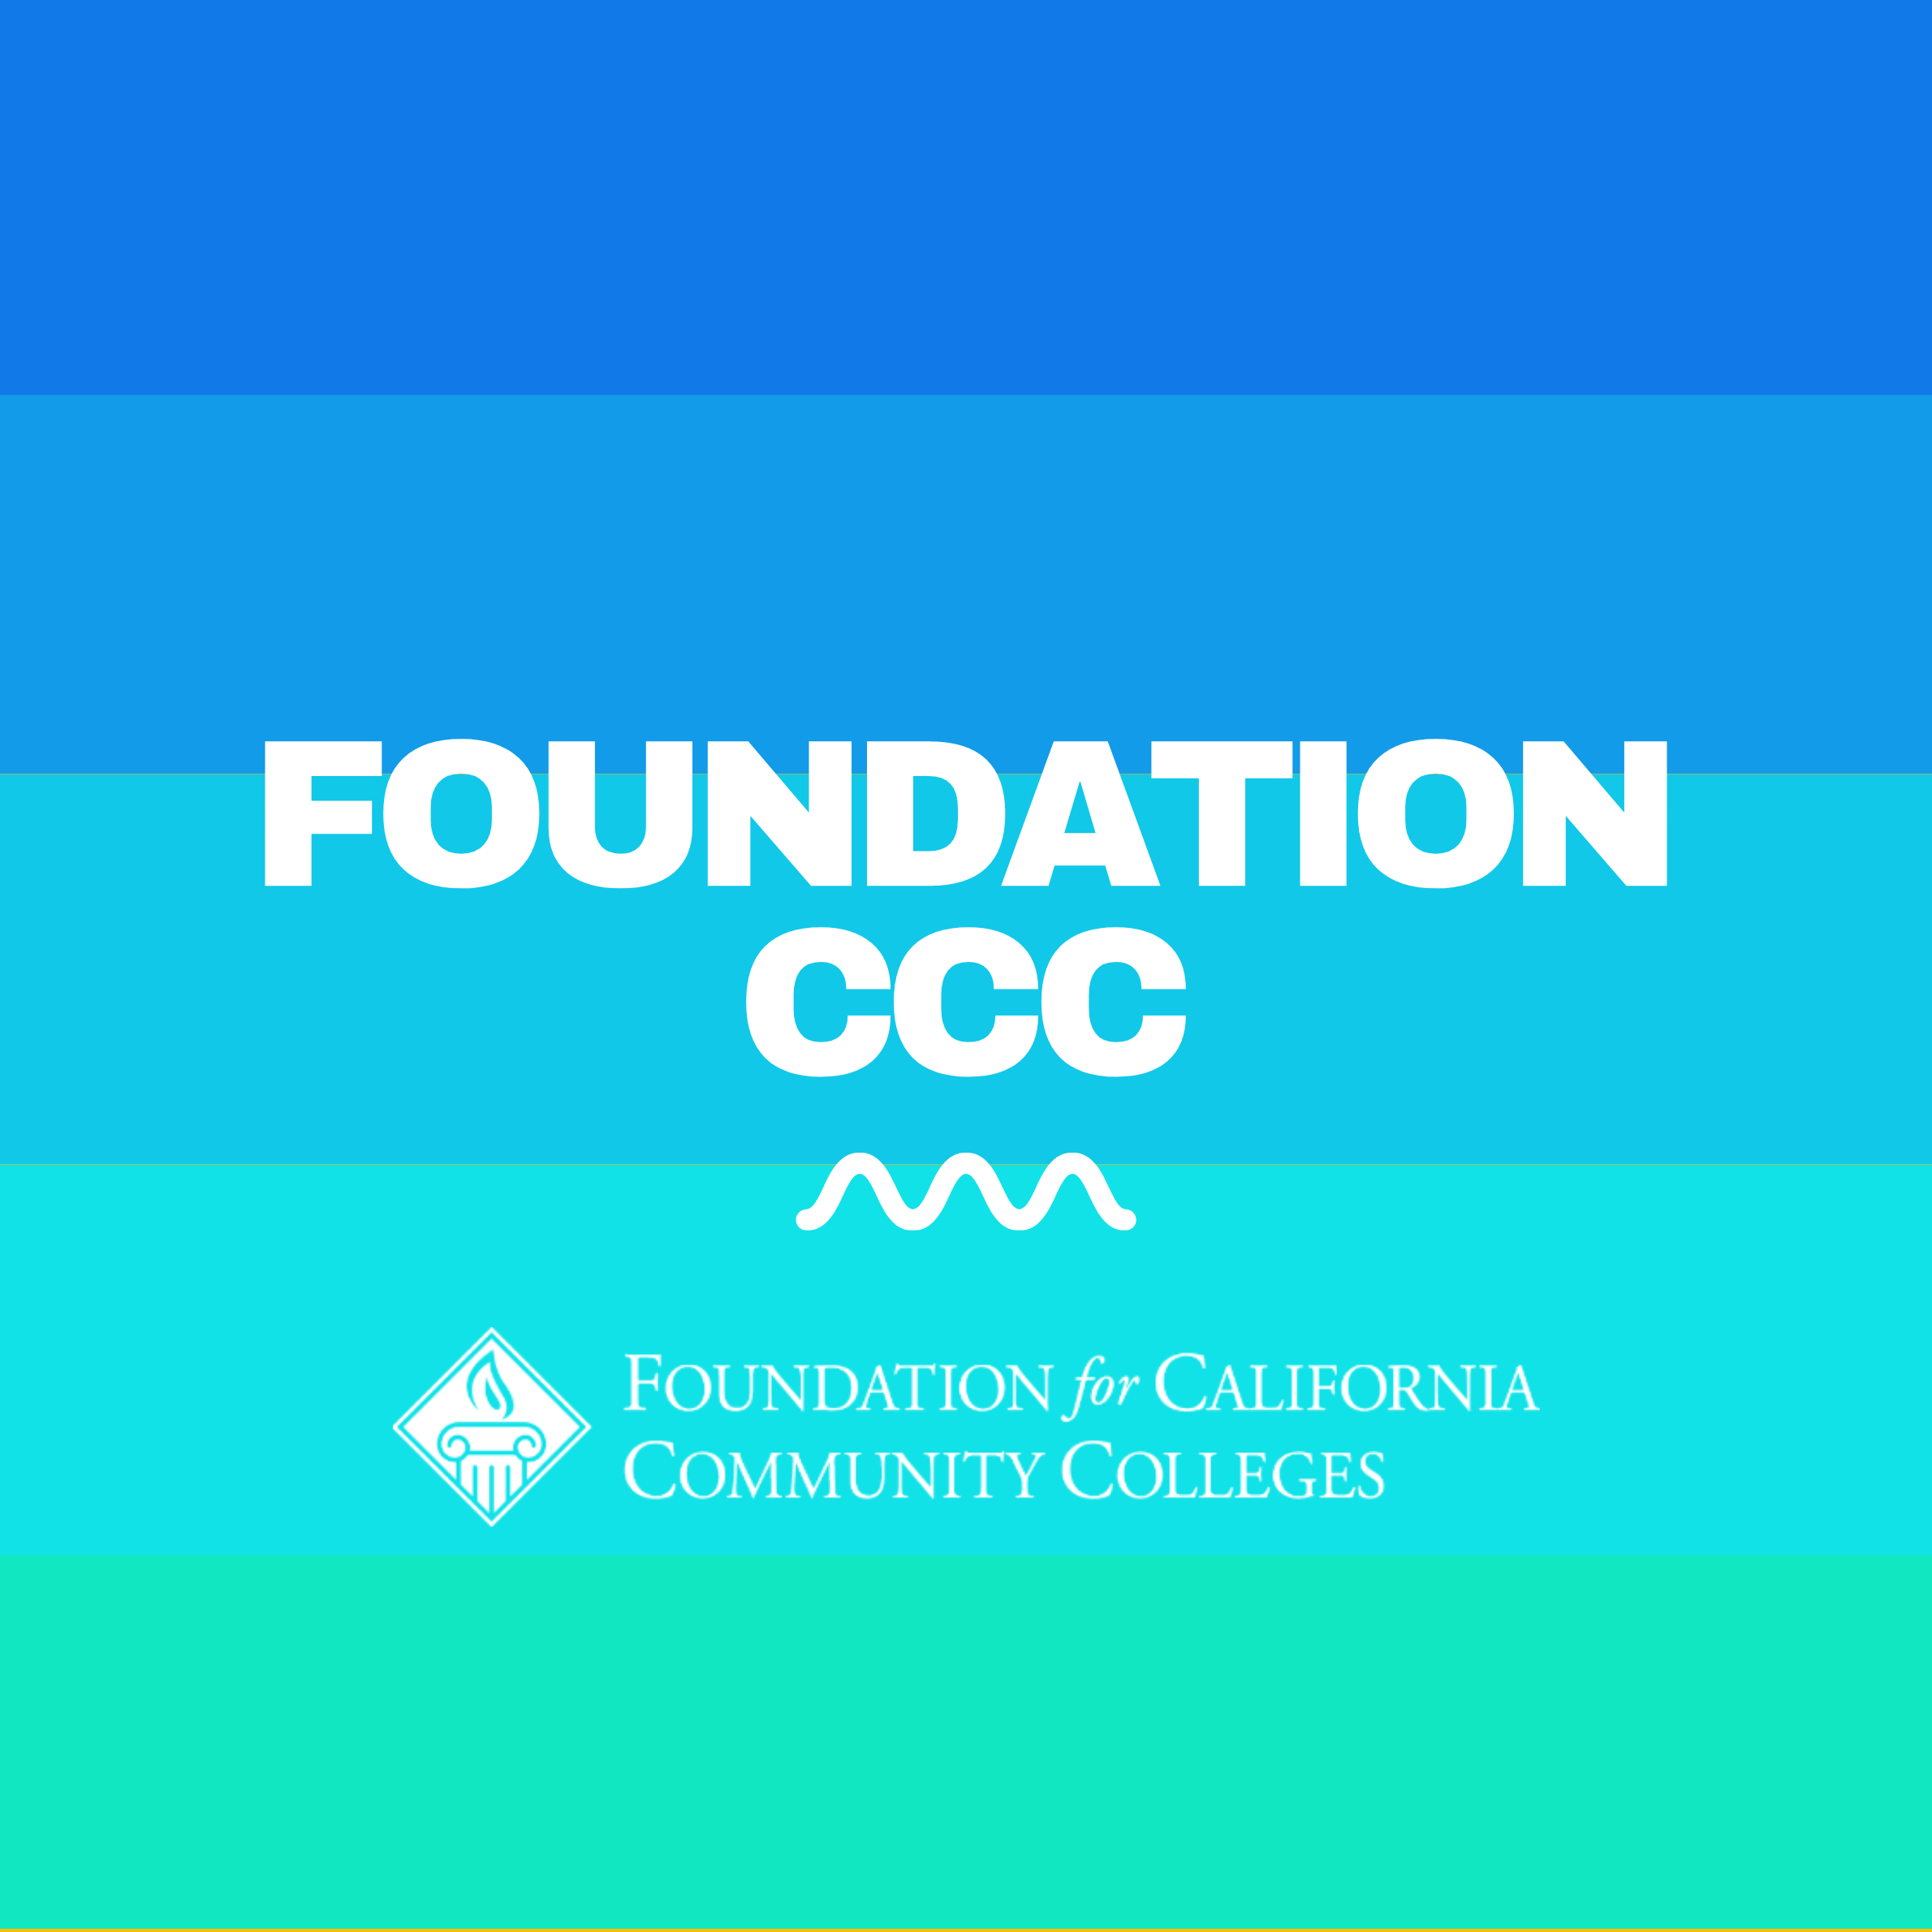 Foundation CCC